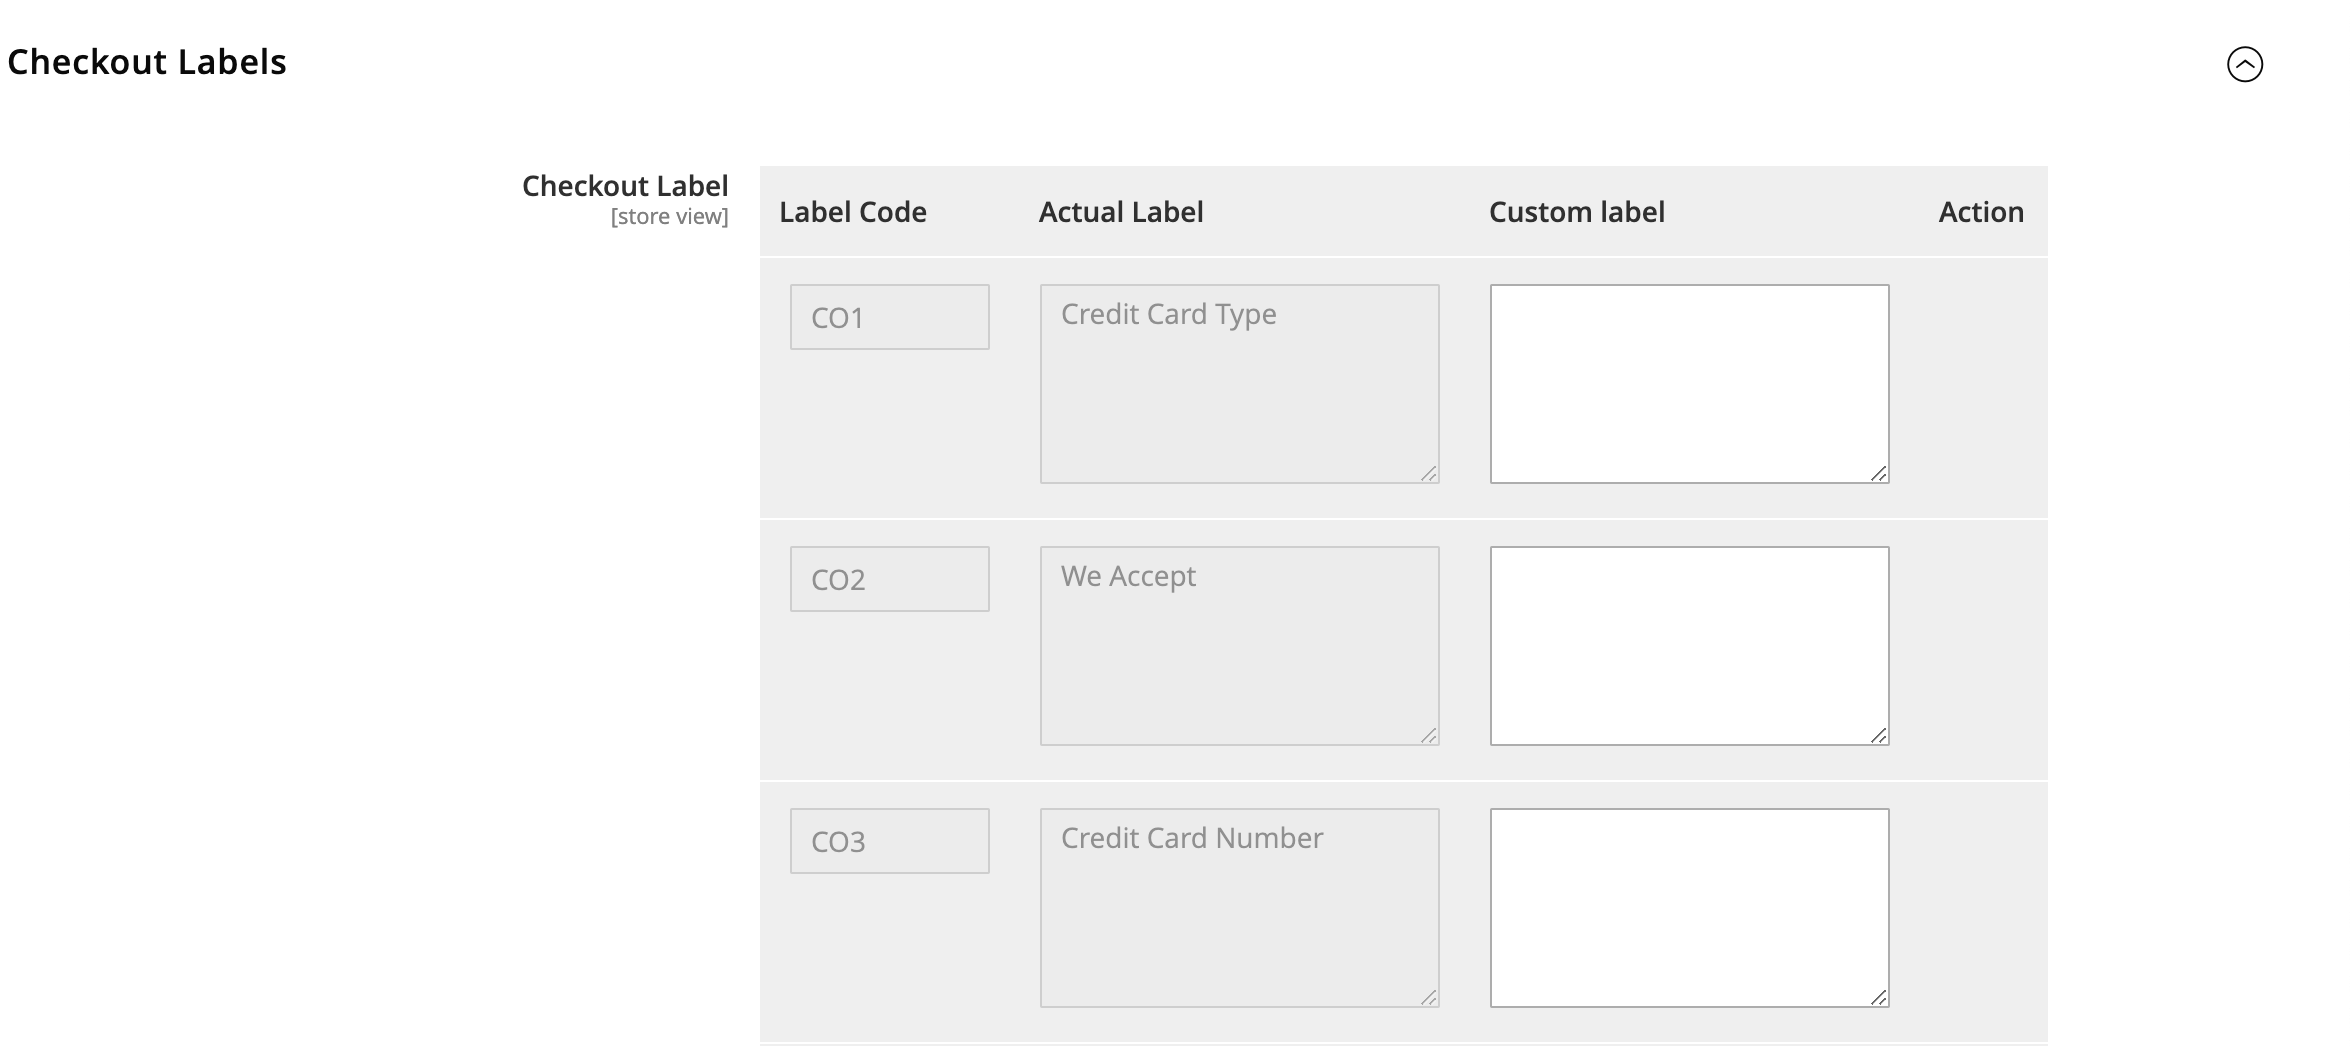 Checkout label configuration screen